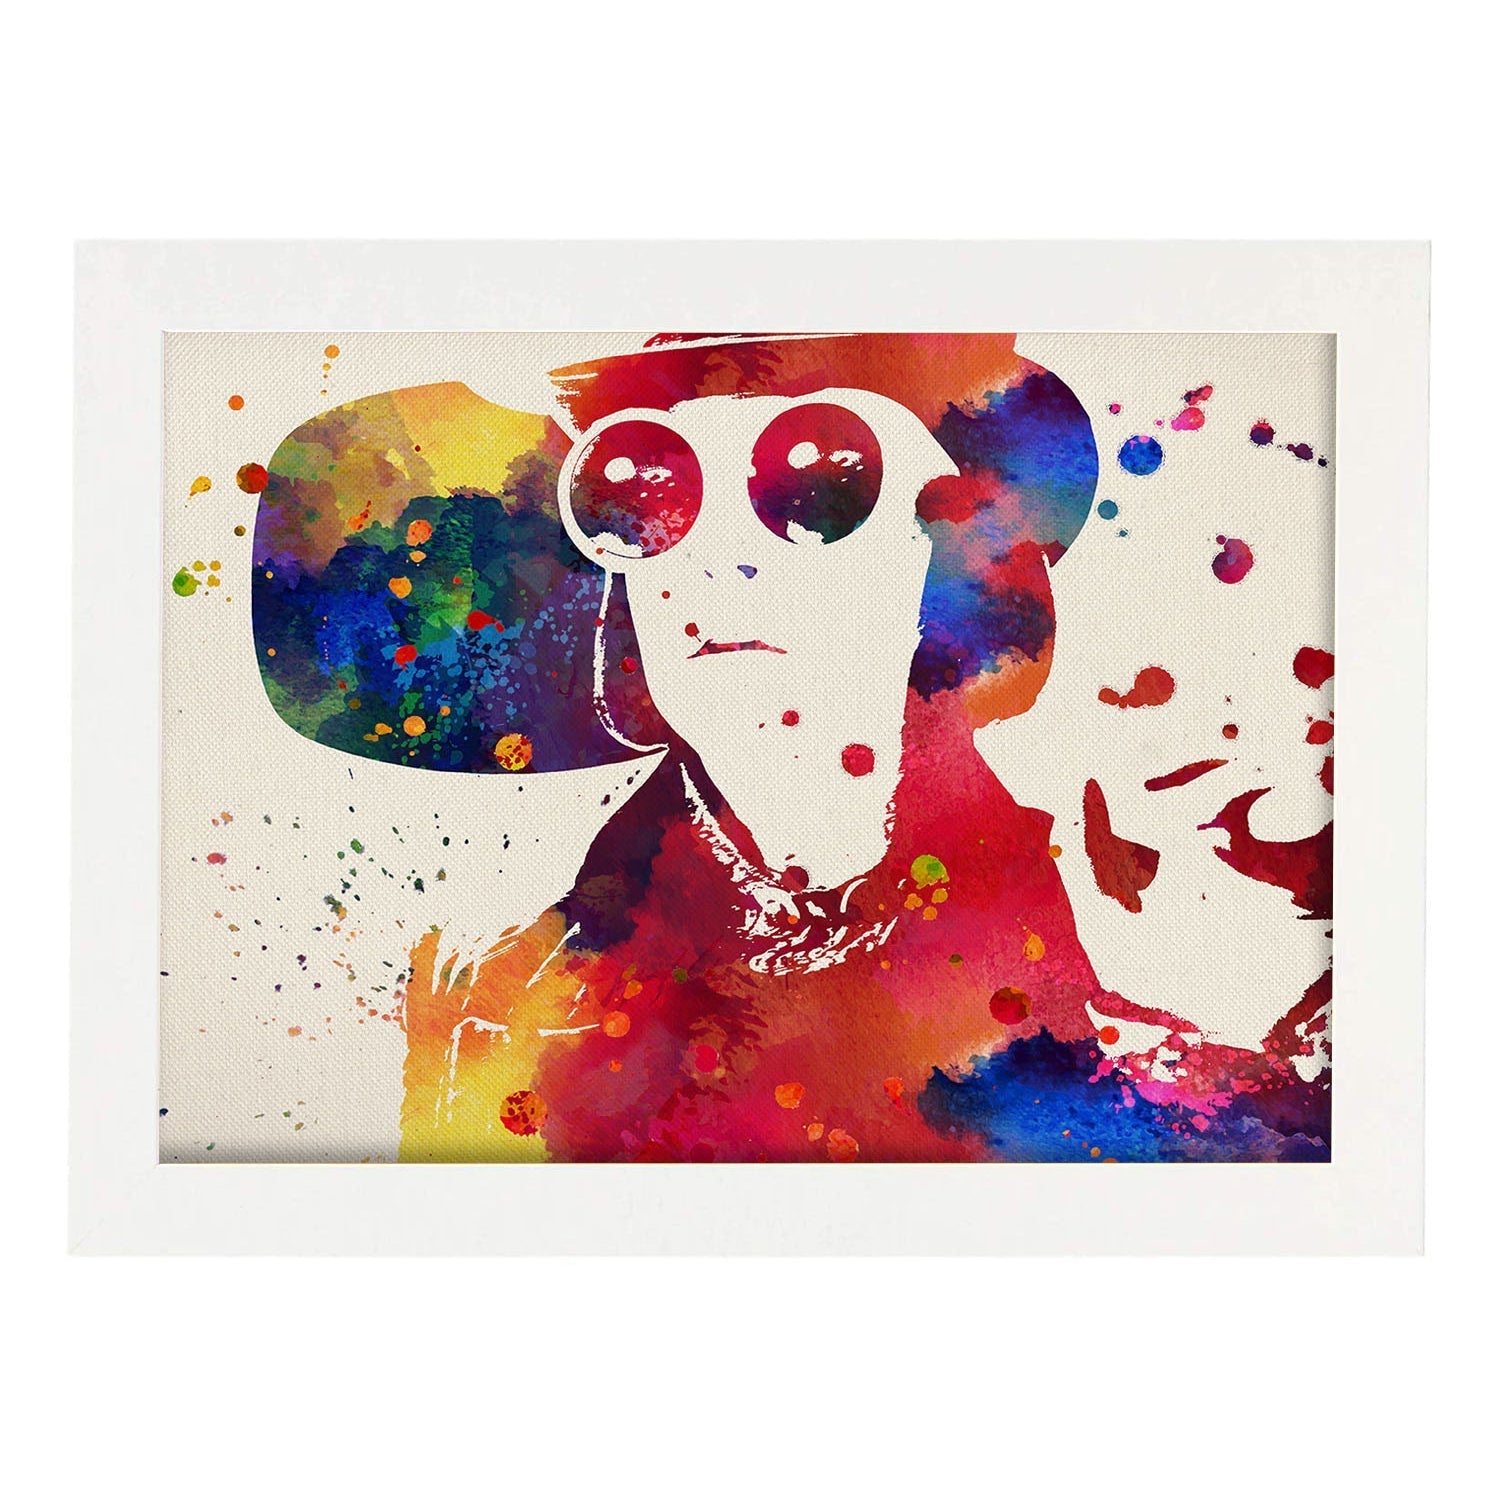 Poster de Willy Wonka con diseño acuarela. Mix de láminas con estilo acuarela-Artwork-Nacnic-A3-Marco Blanco-Nacnic Estudio SL